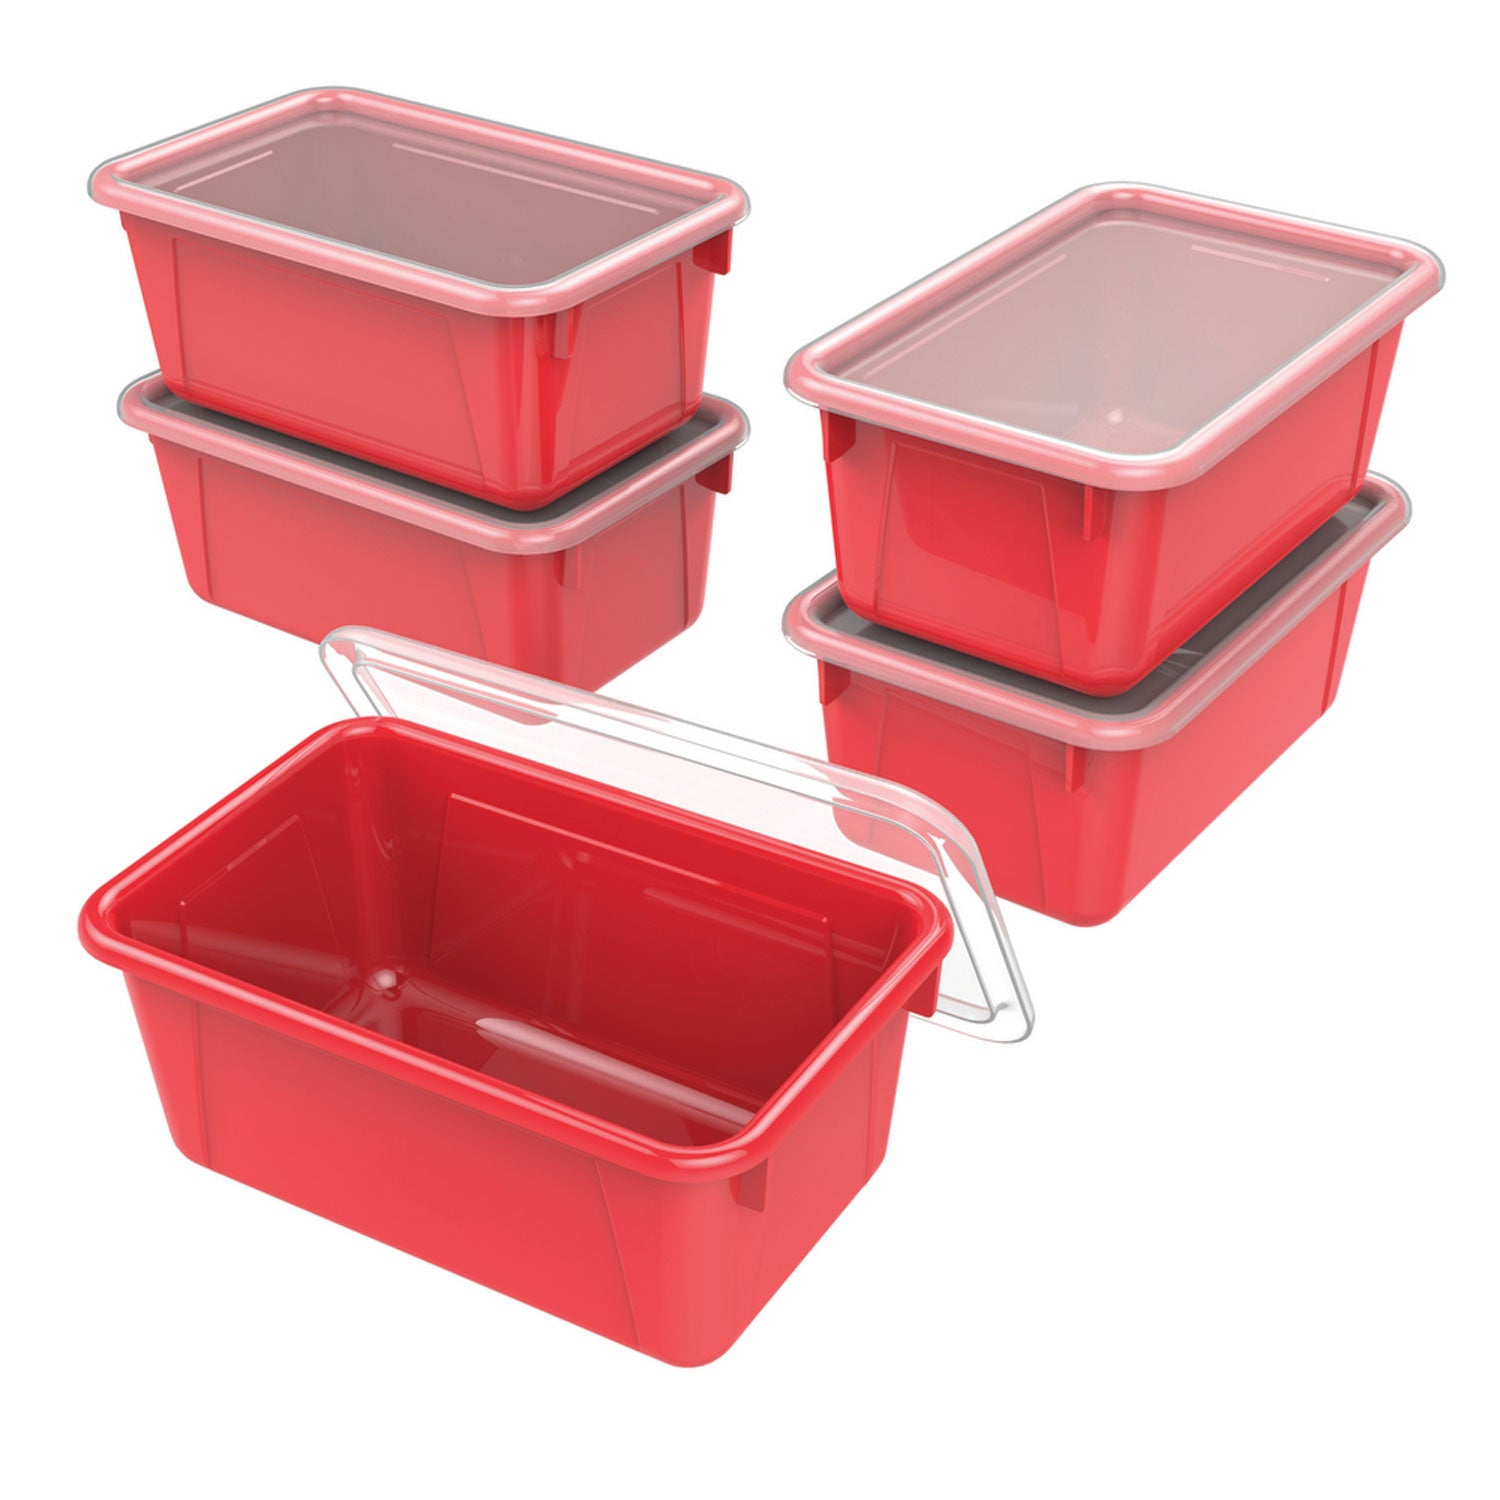 cubby-bin-with-lid-1228-x-795-x-523-red-5-pack_stx62407u05c - 1